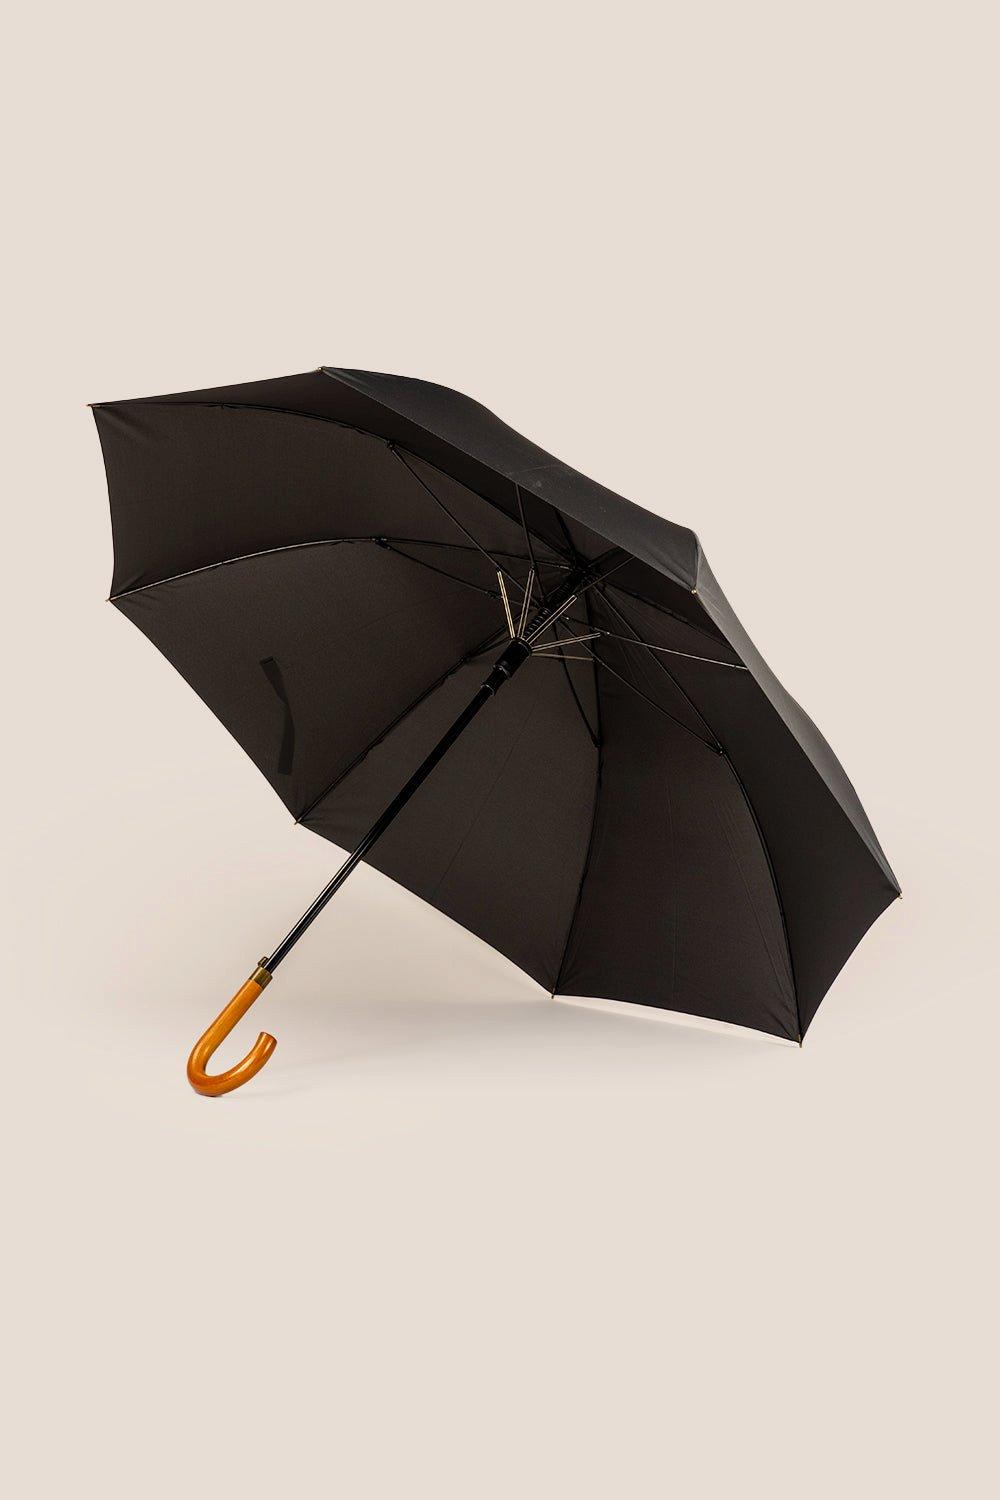 Jaxon Handcrafted Umbrella